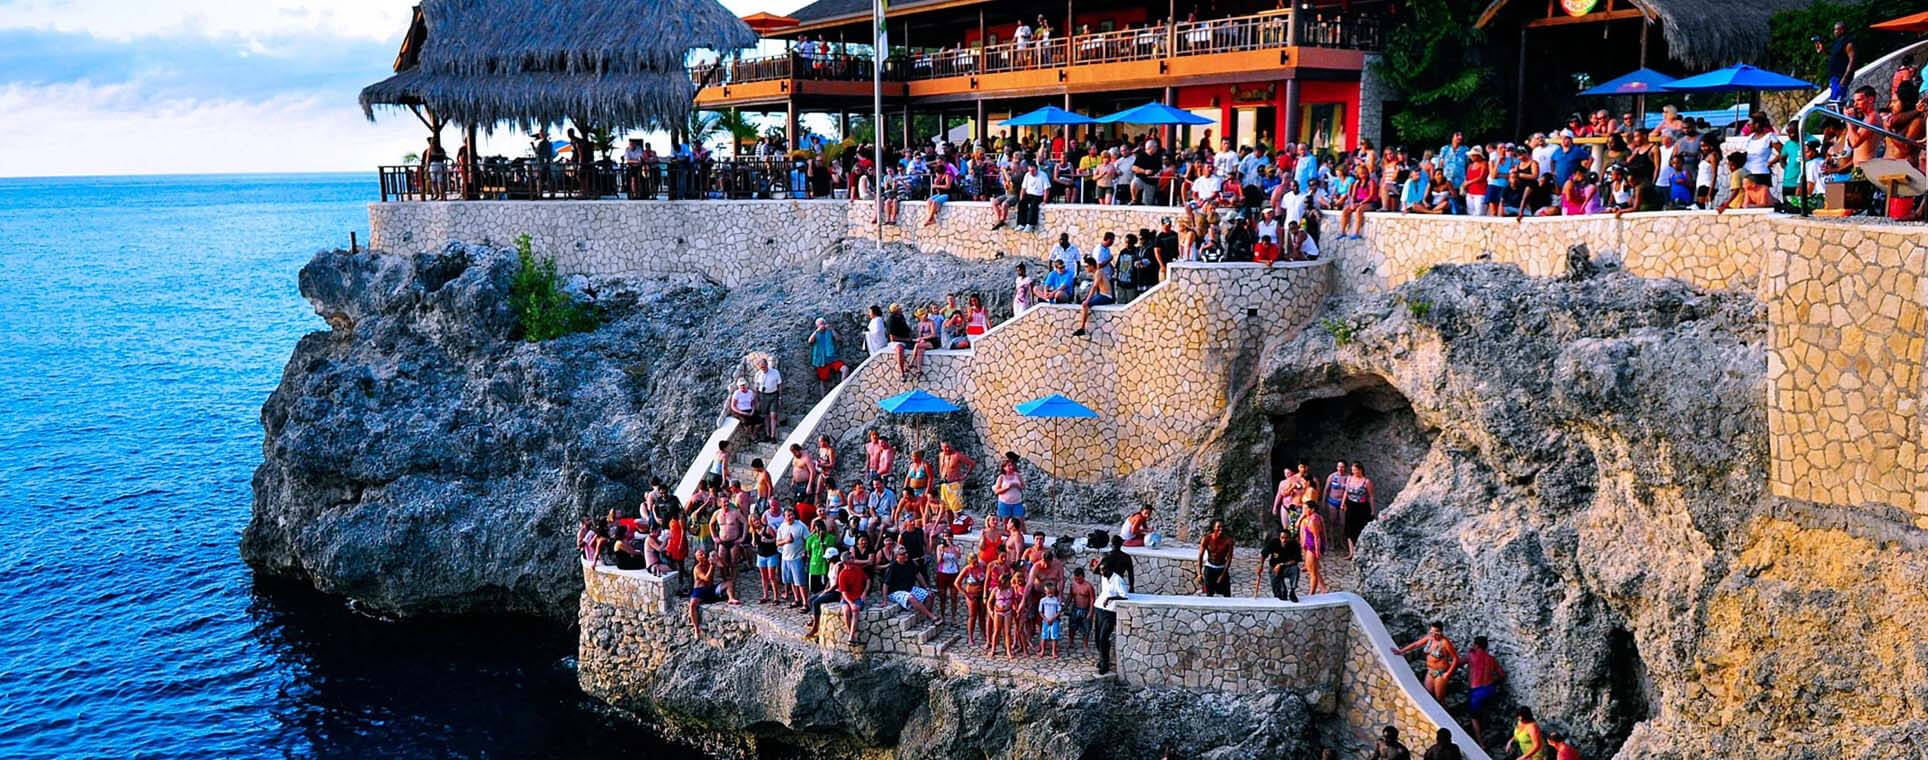 Jamaica Tourist Attractions